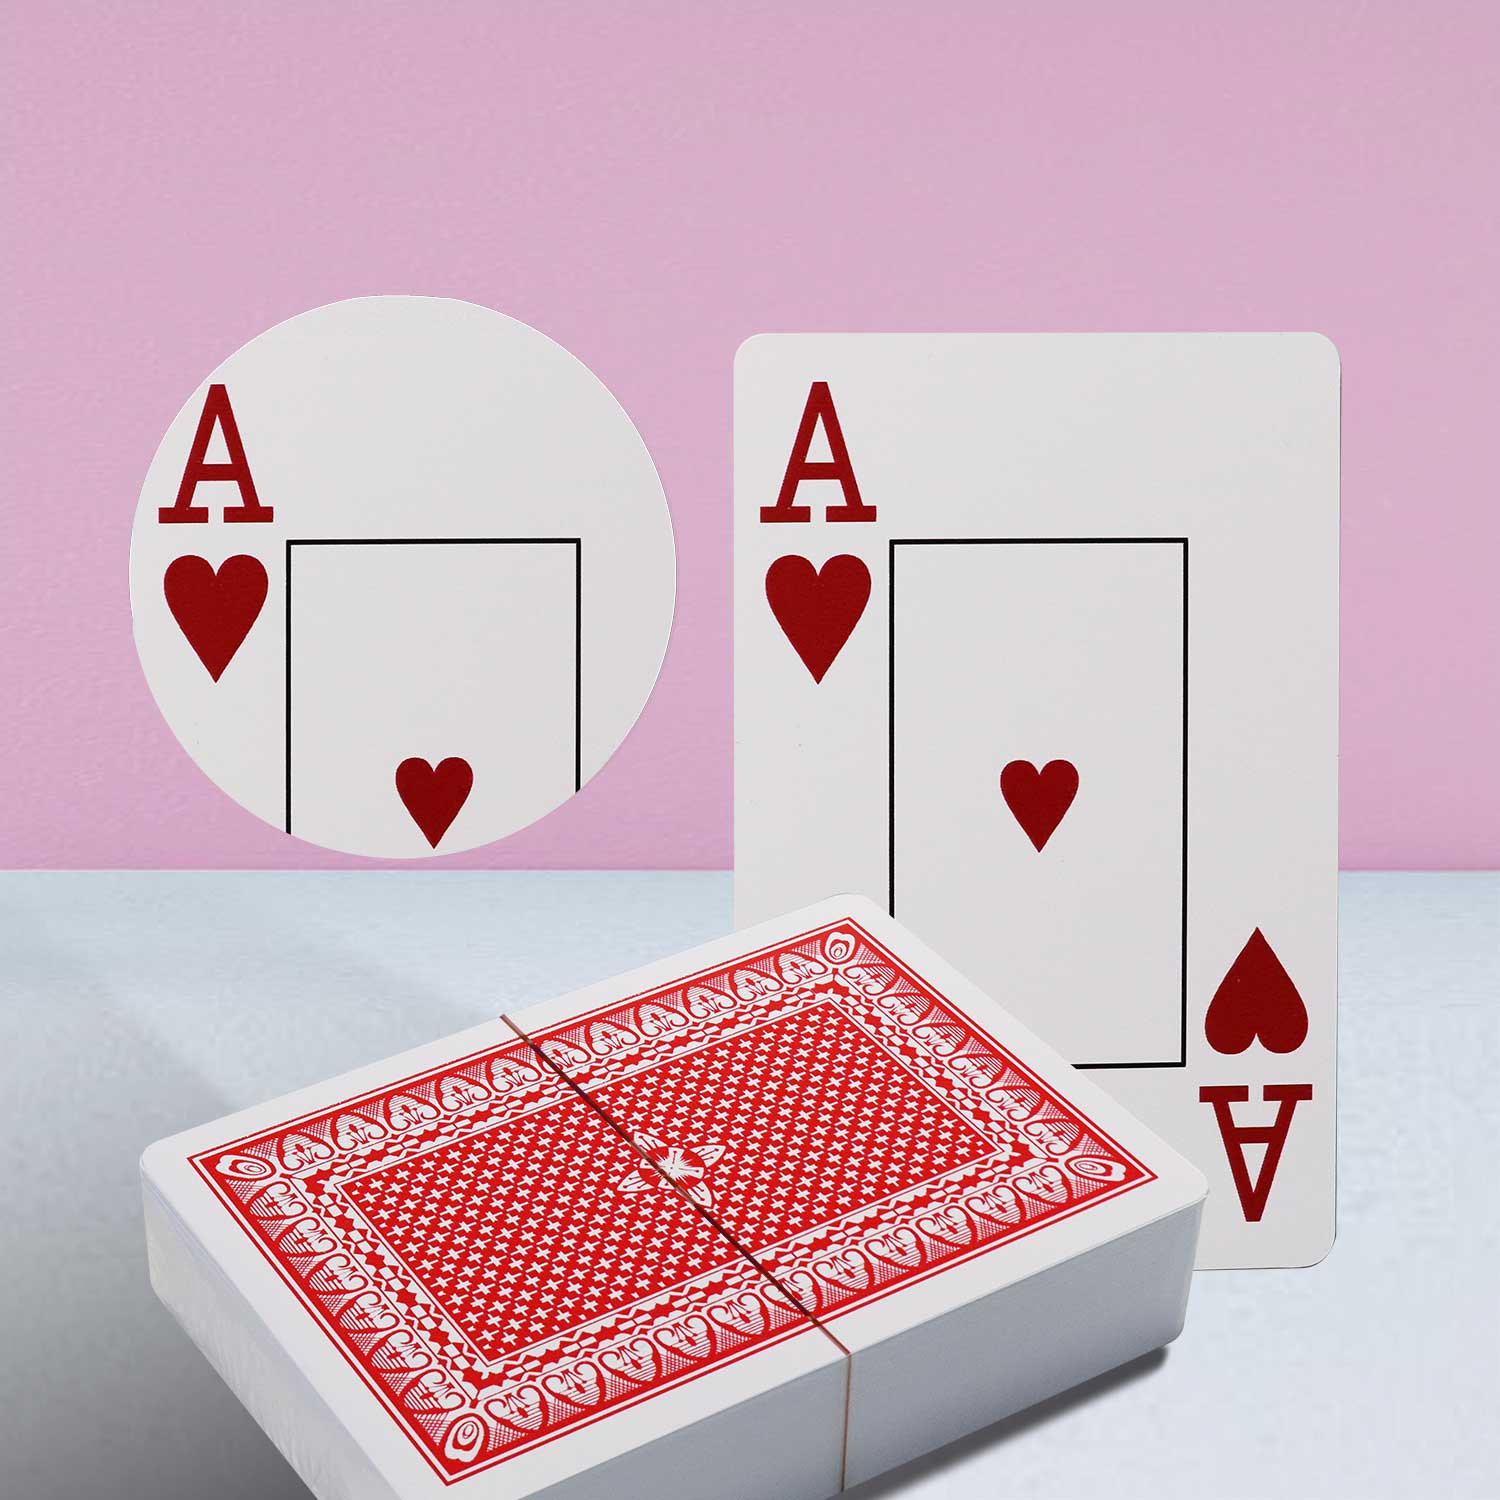 Royal Plastic Playing Cards Jumbo Index